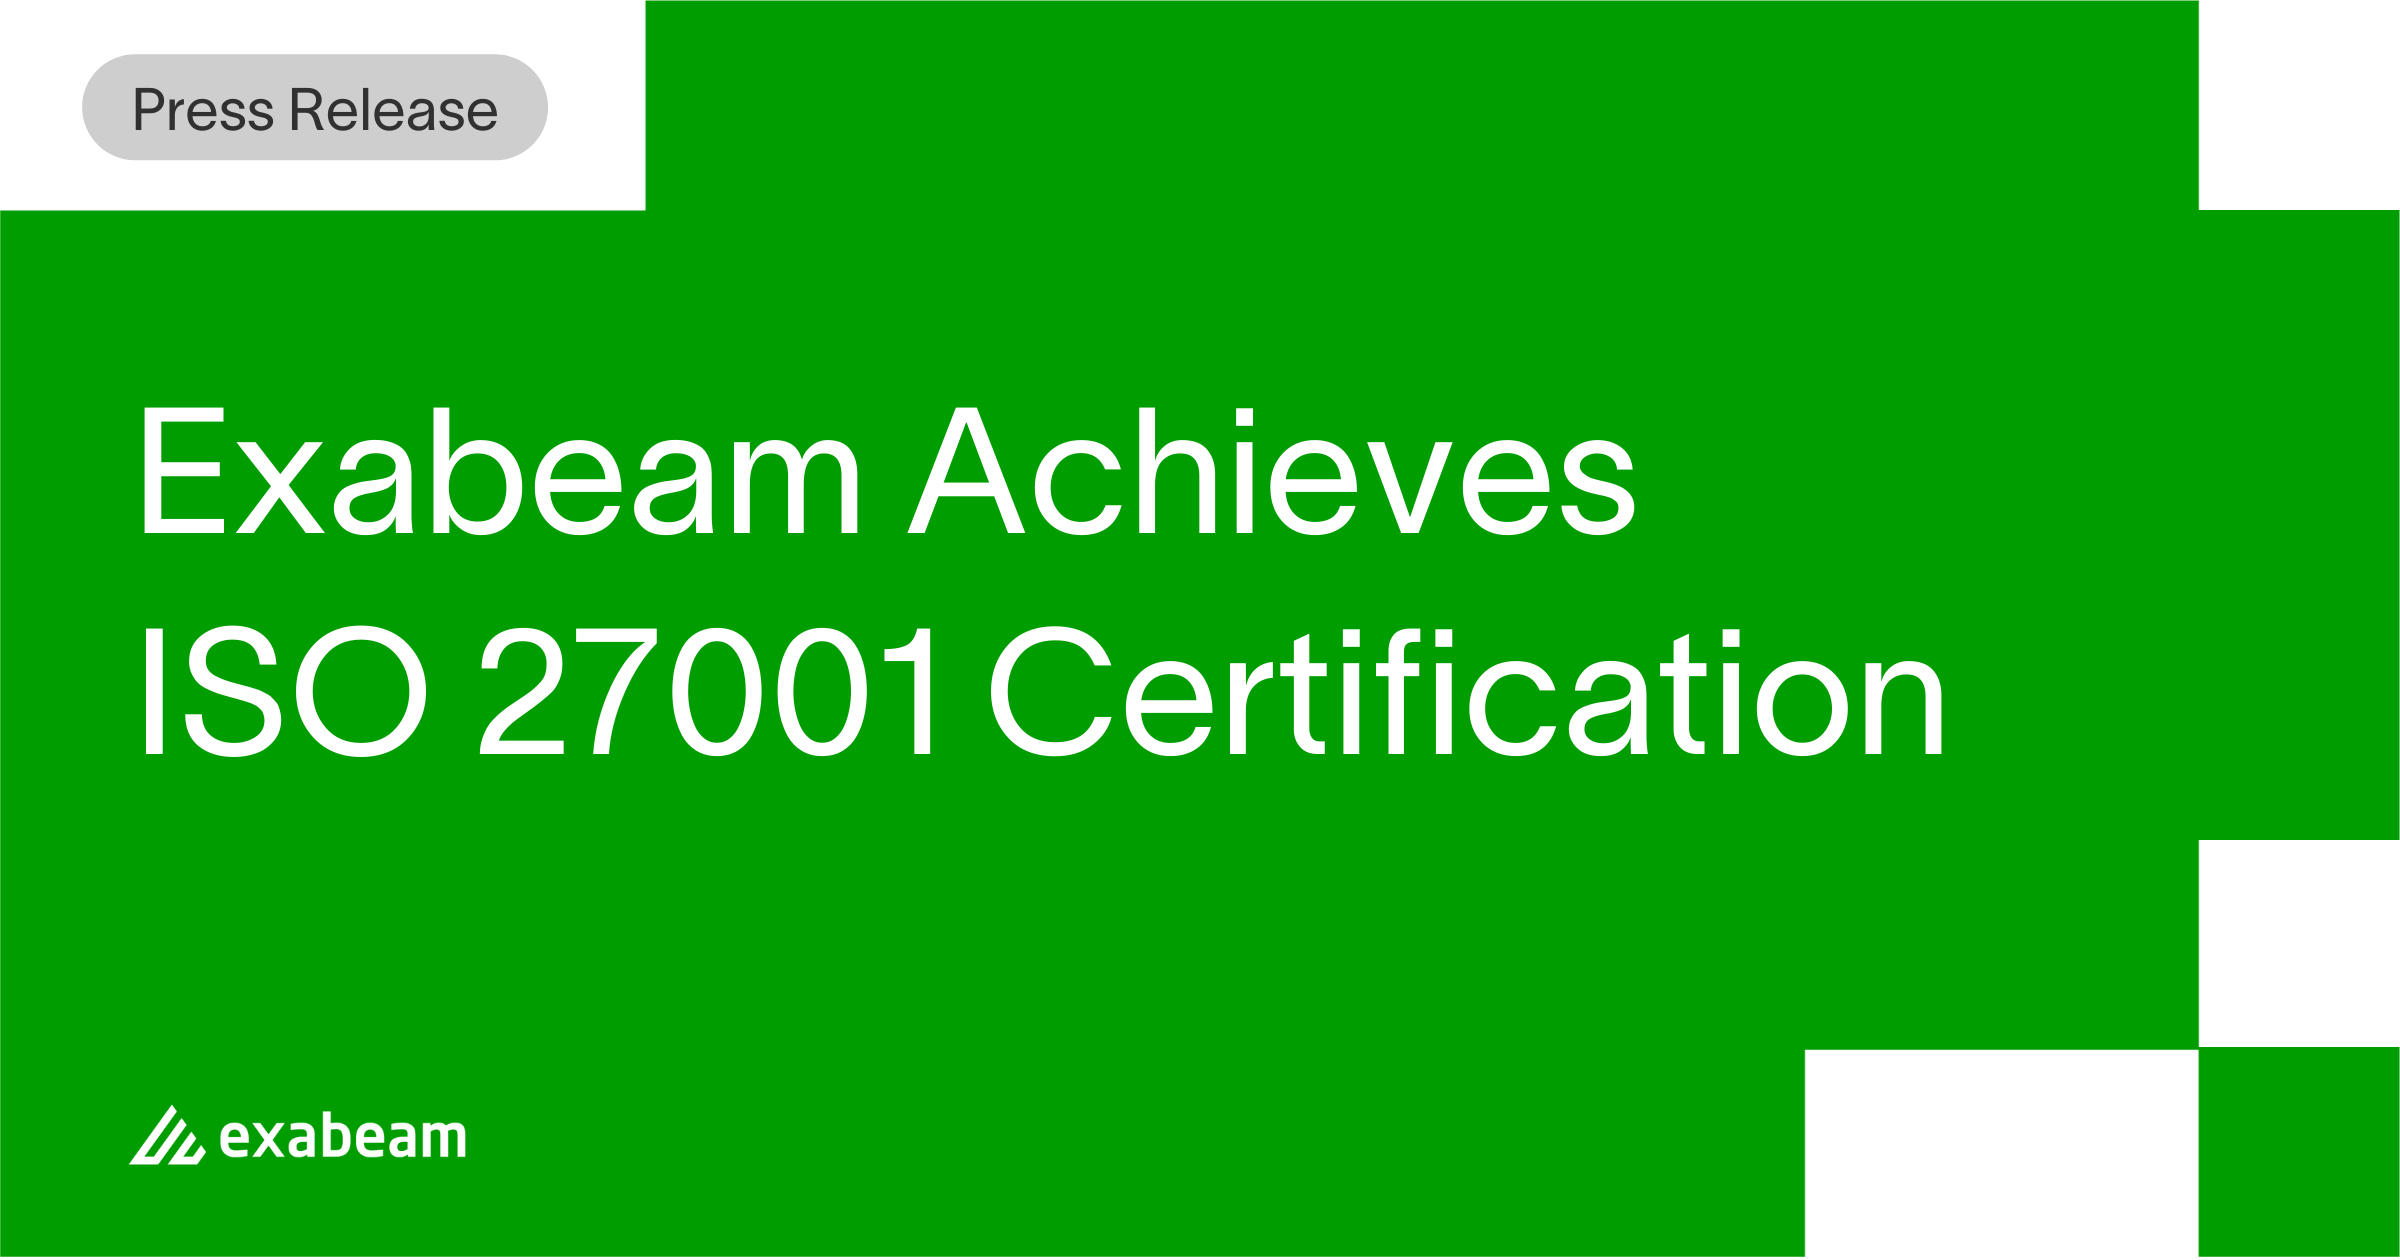 Exabeam Achieves ISO 27001 Certification